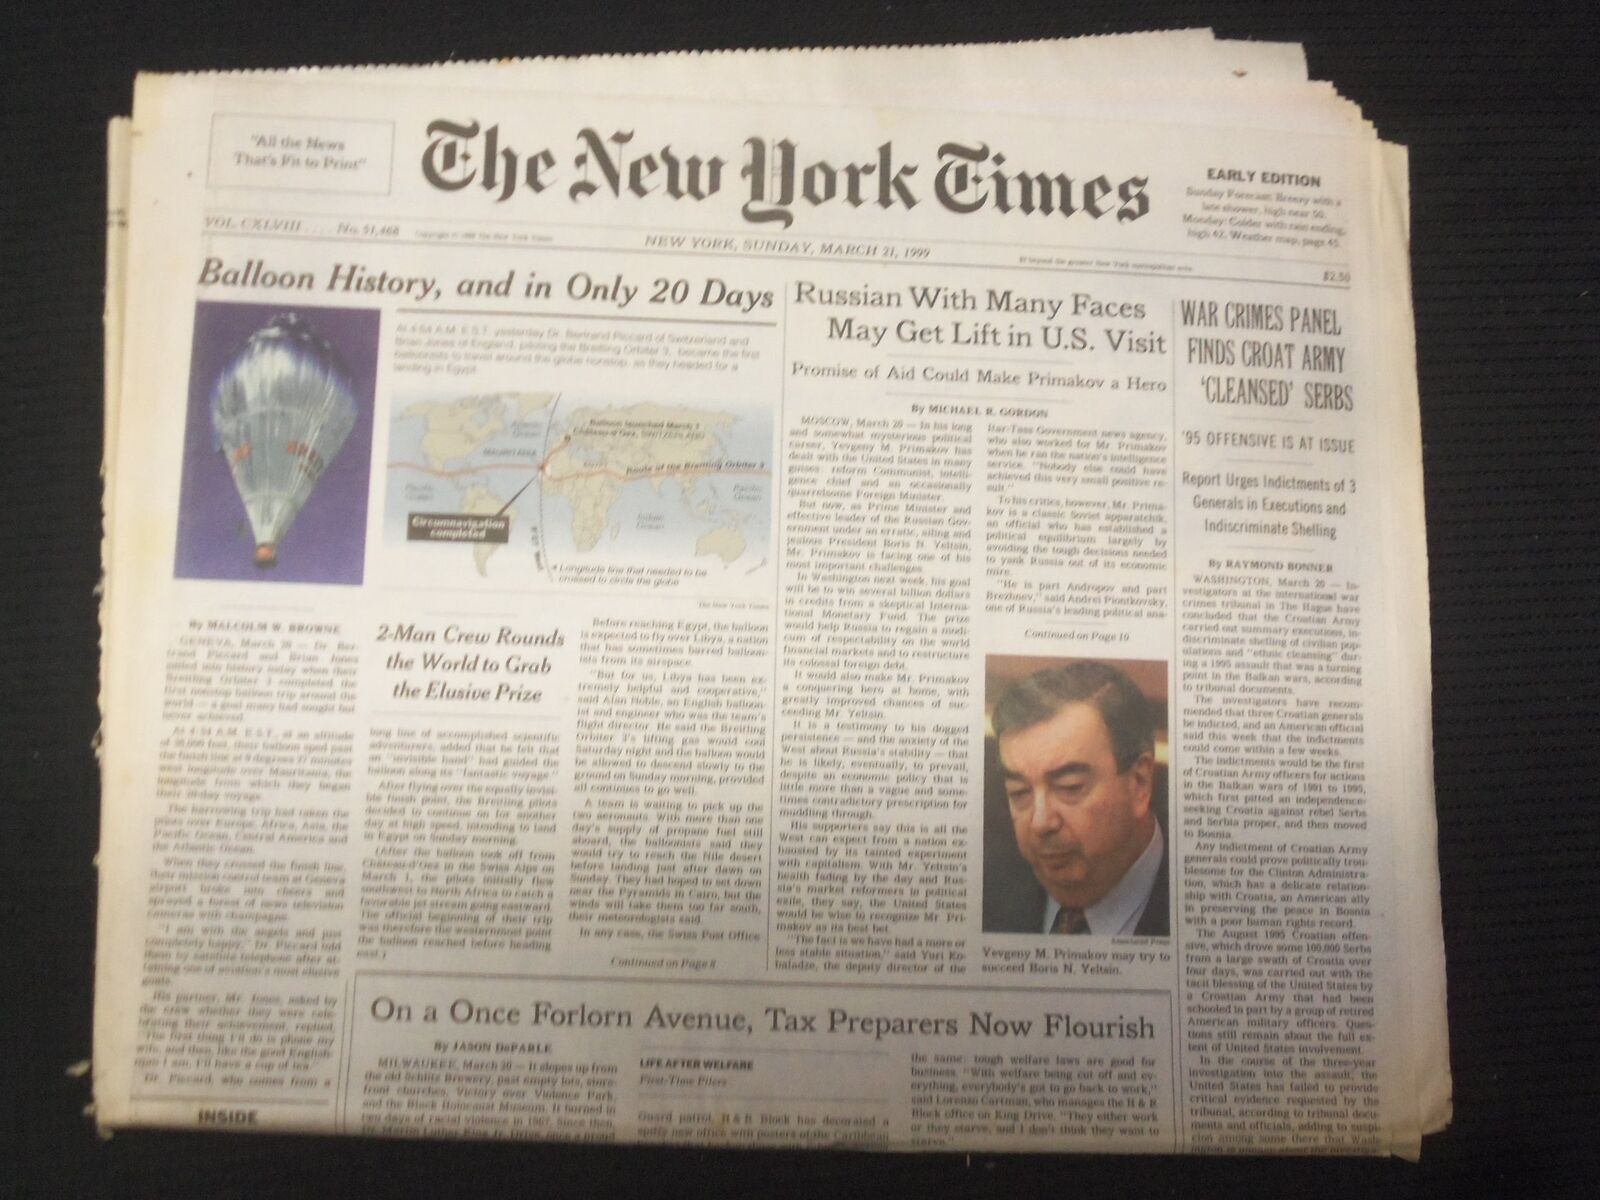 1999 MAR 21 NEW YORK TIMES NEWSPAPER - WAR CRIMES PANEL, CROAT ARMY - NP 6981